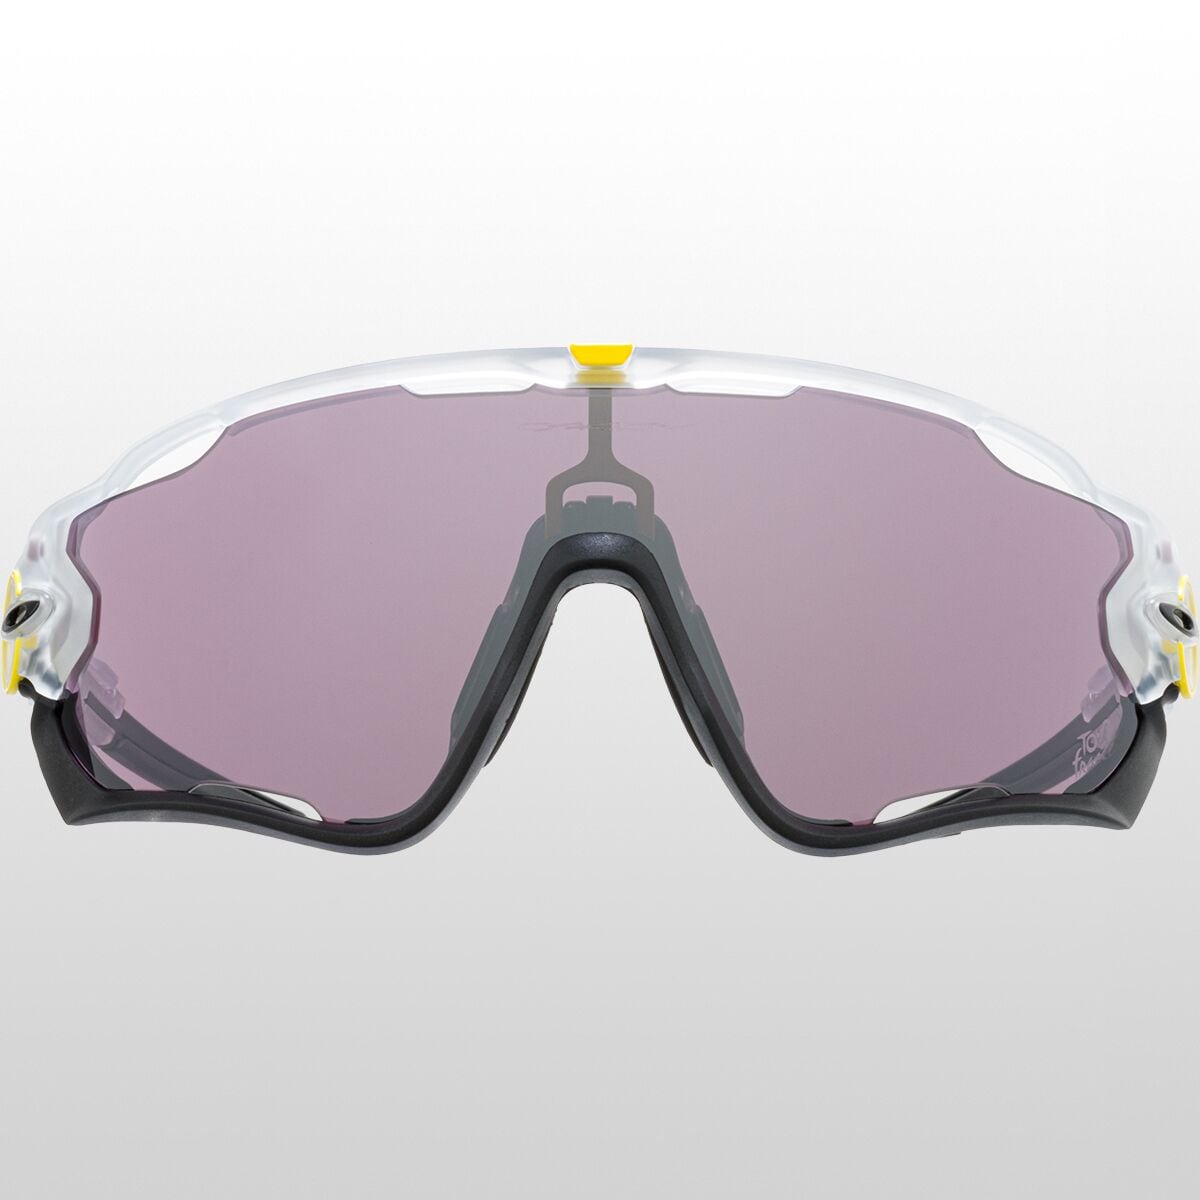 Oakley Jawbreaker Prizm Sunglasses - Men